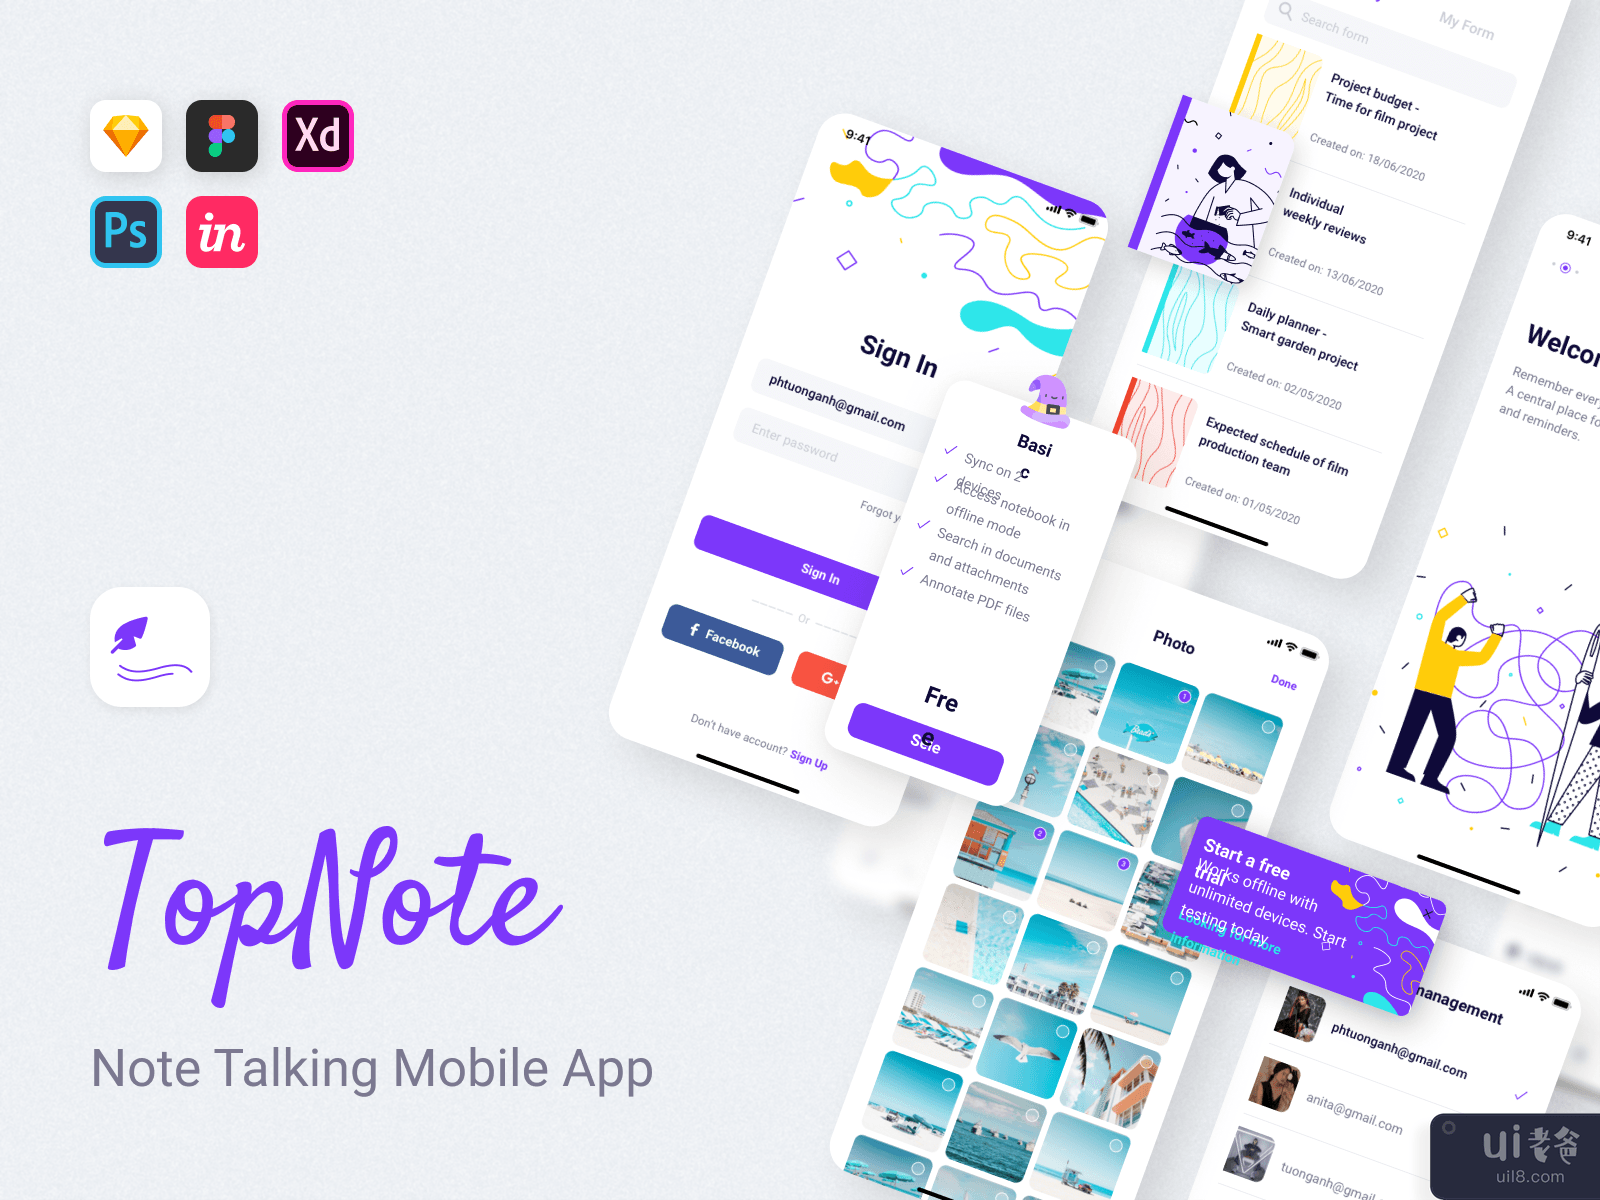 TopNote - Note Talking Mobile App (Light Theme) #1